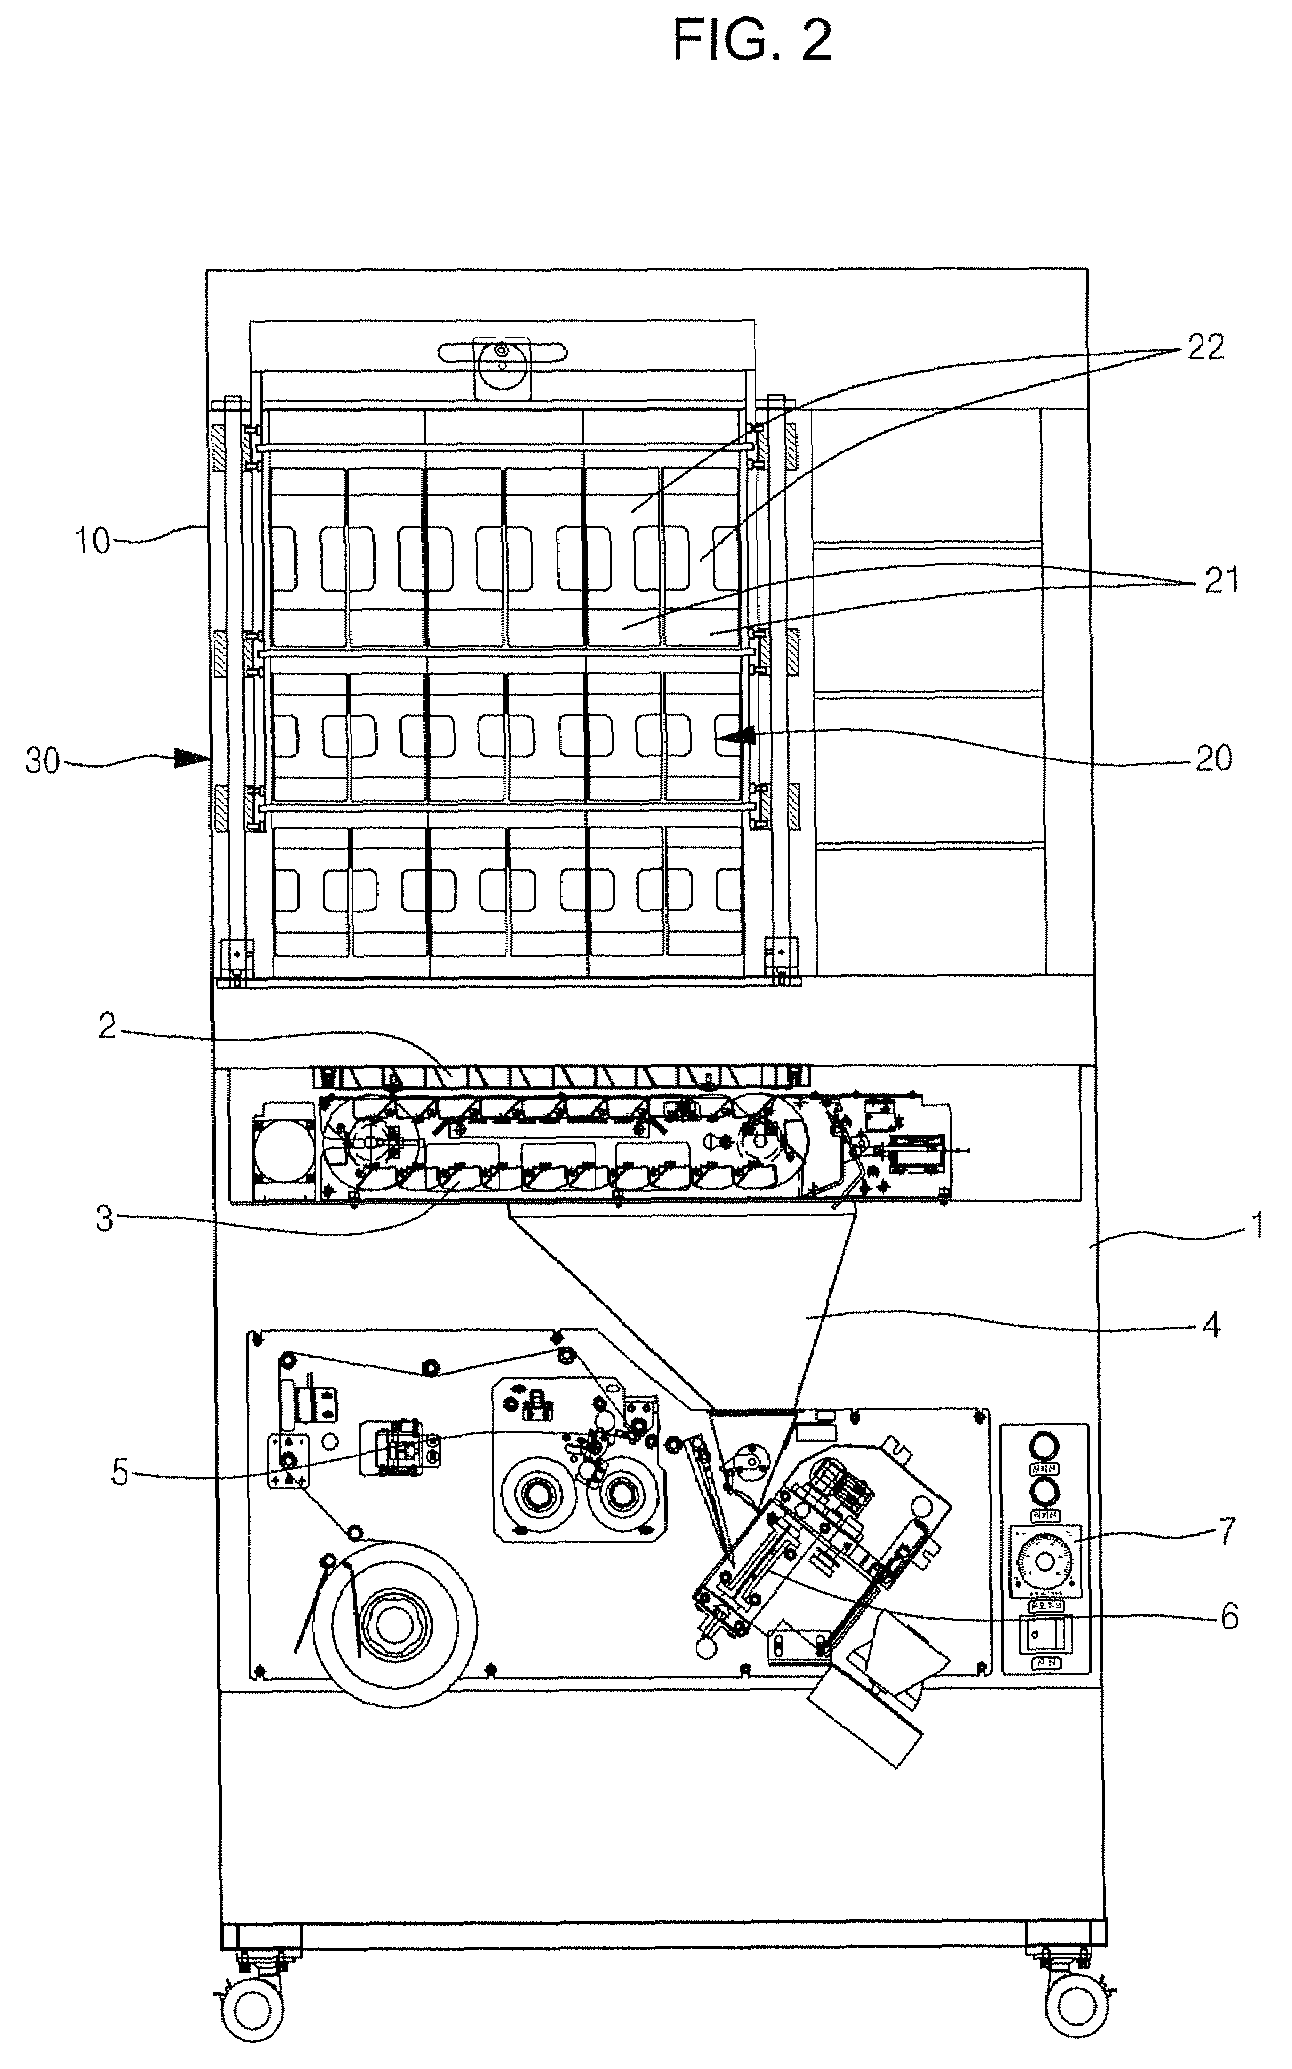 Semi-automatic medicine packaging machine with cassette lock unit